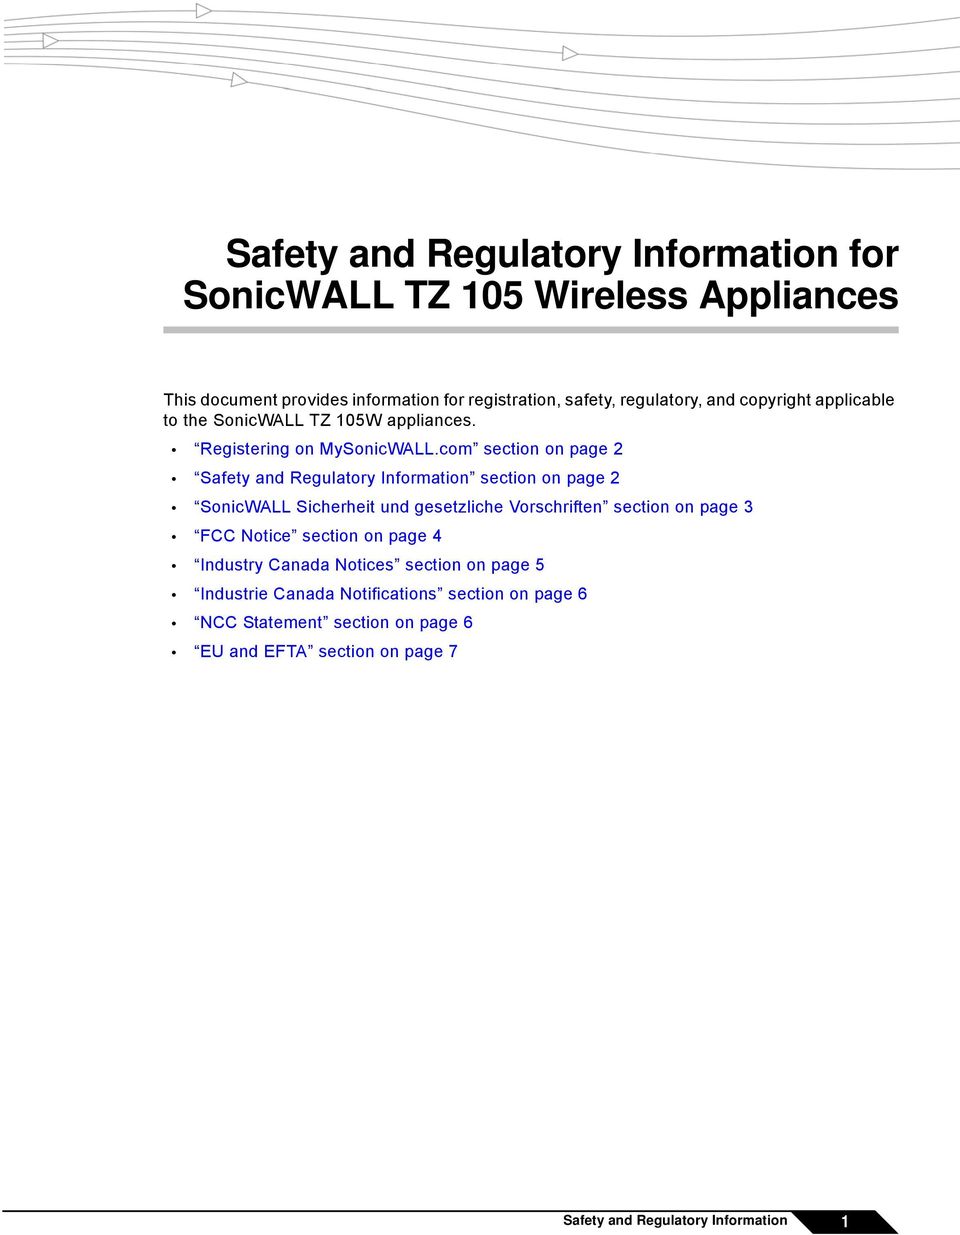 com section on page 2 section on page 2 SonicWALL Sicherheit und gesetzliche Vorschriften section on page 3 FCC Notice